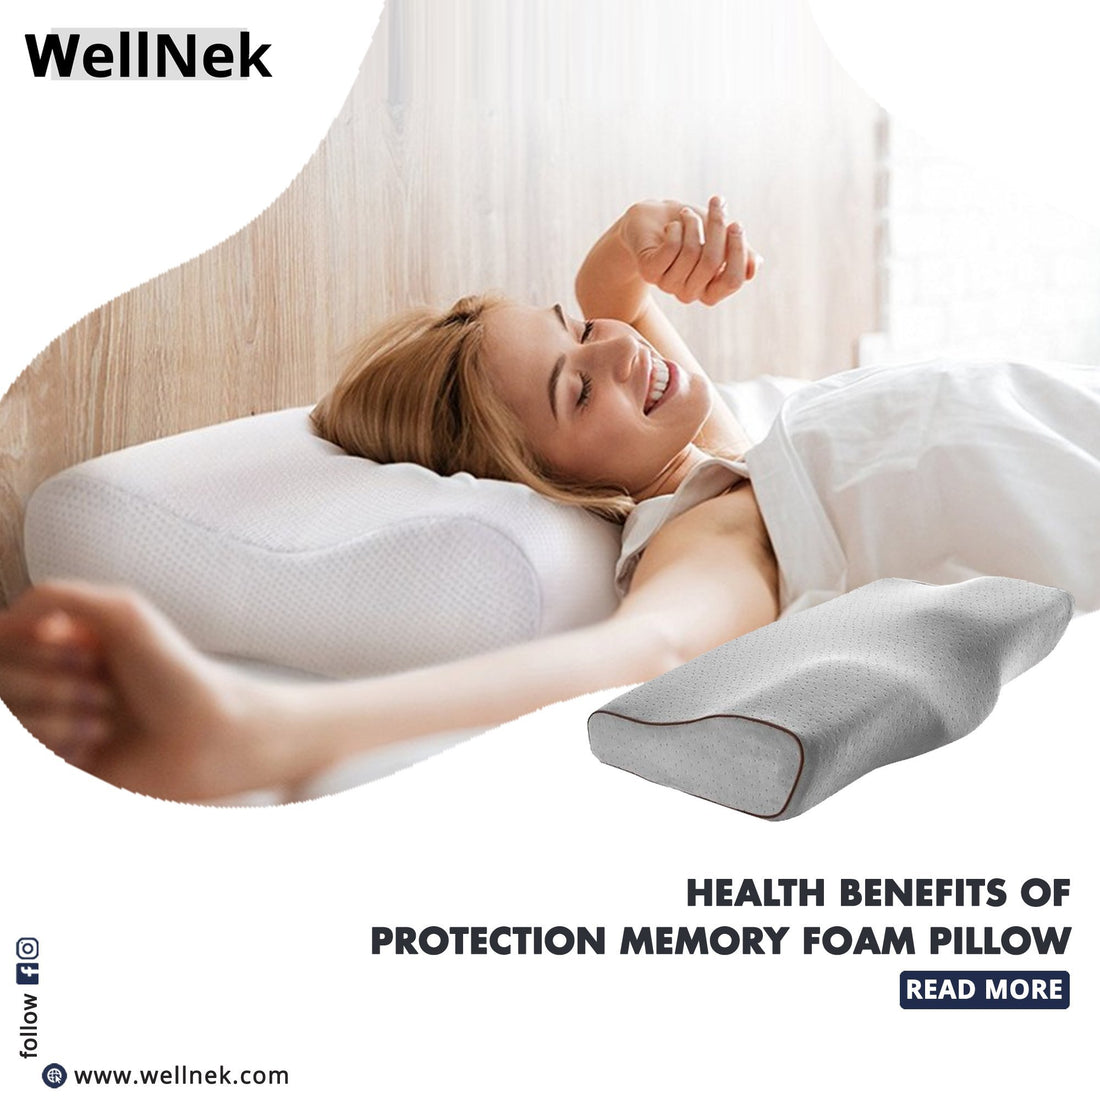 Health Benefits of Protection Memory Foam Pillow | Wellnek